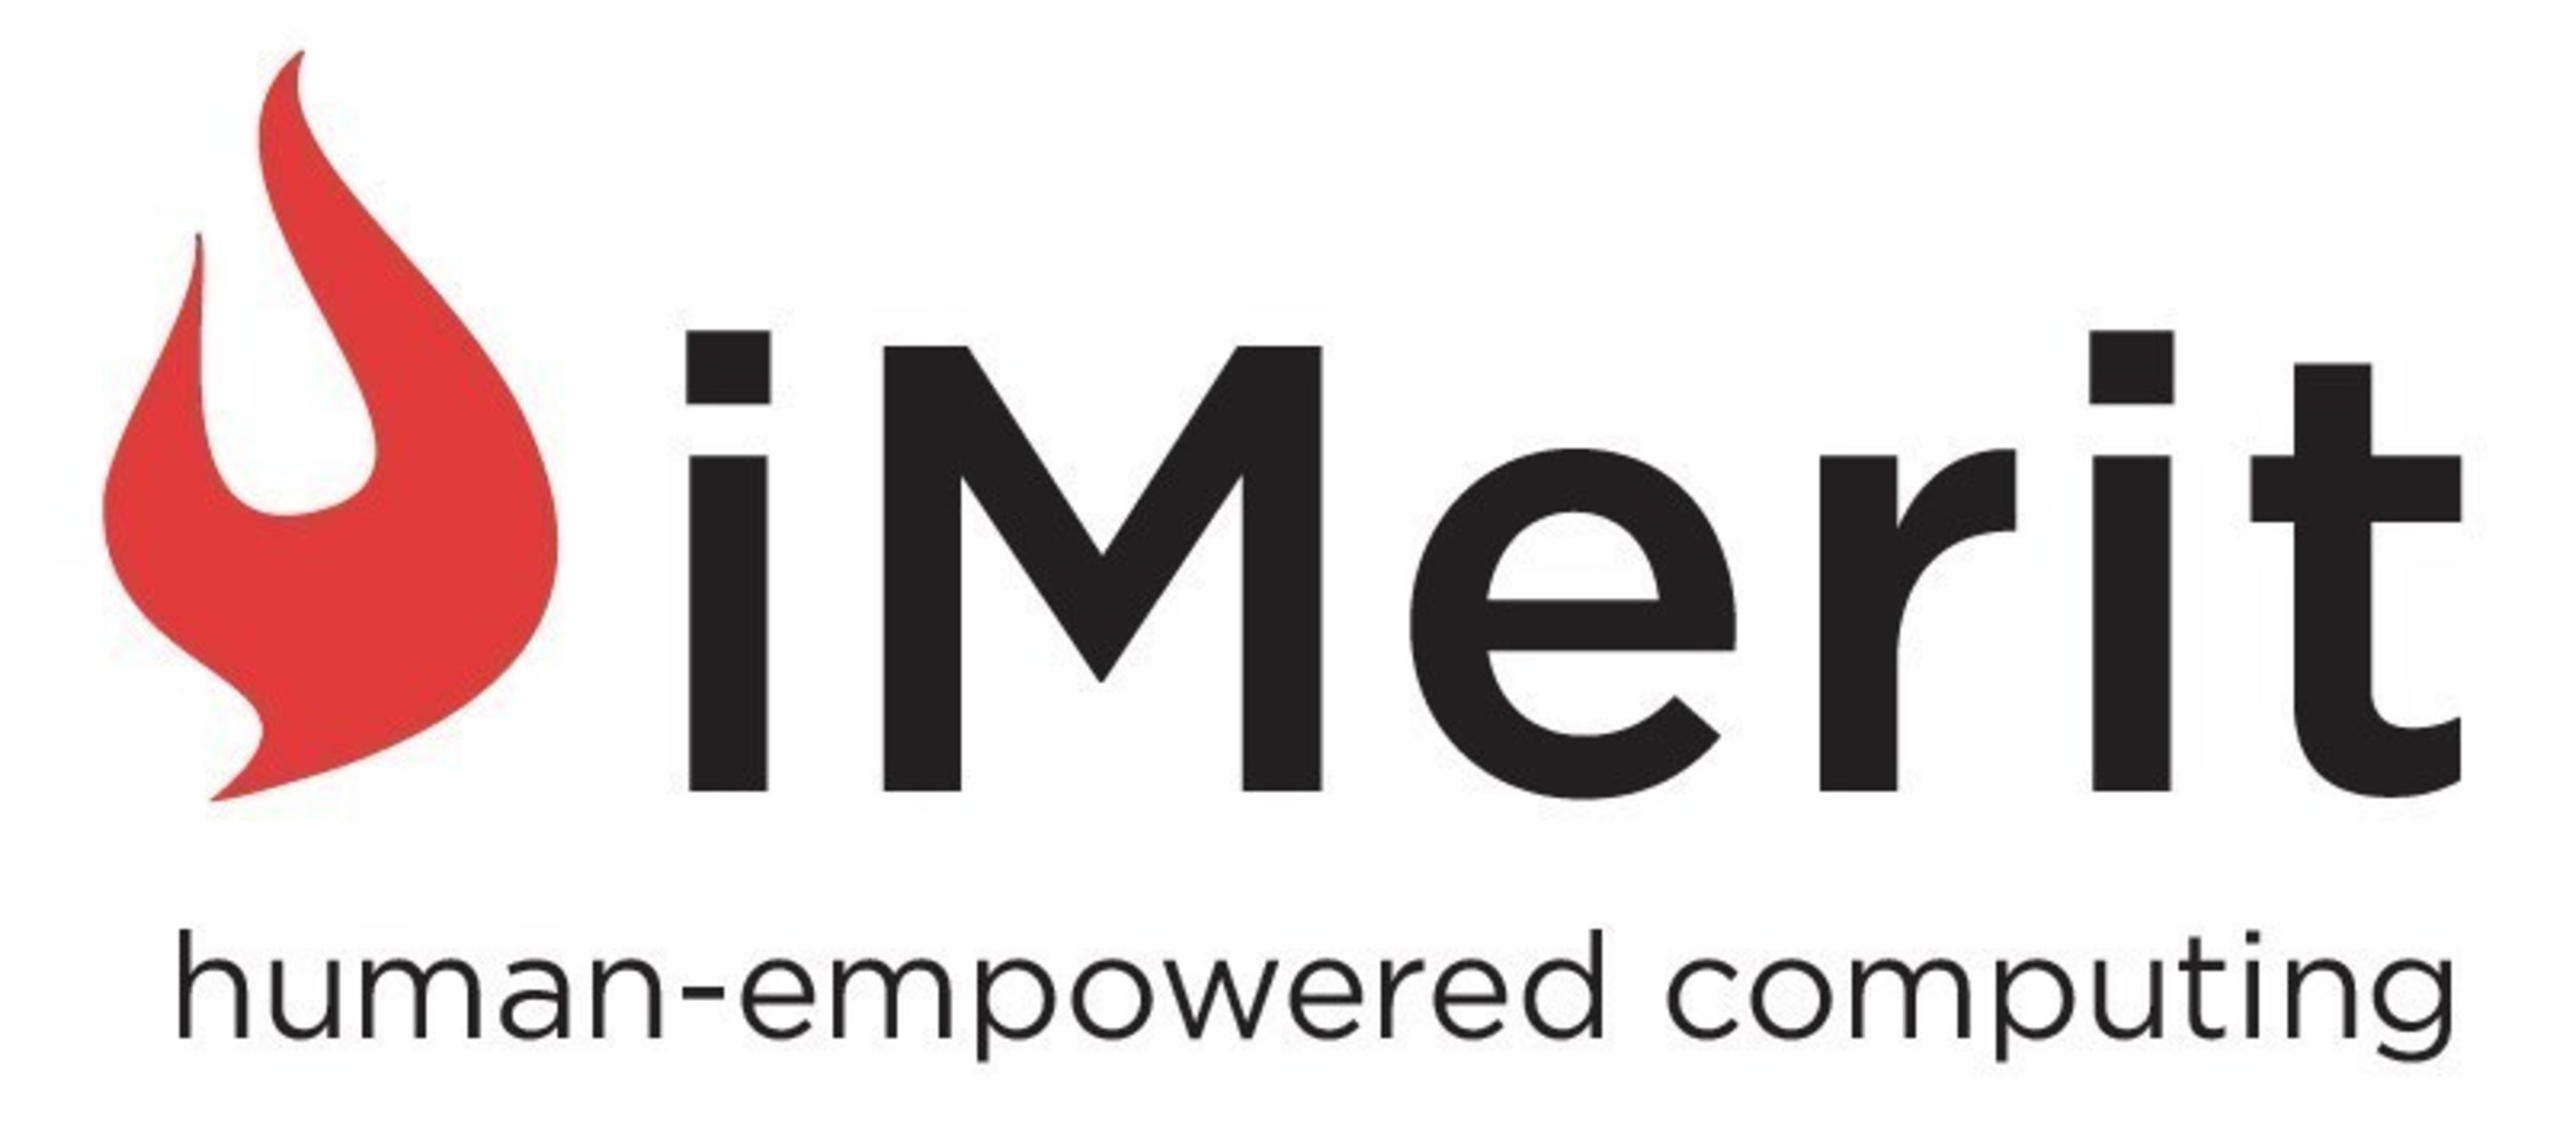 iMerit, a Human-Empowered Computing company